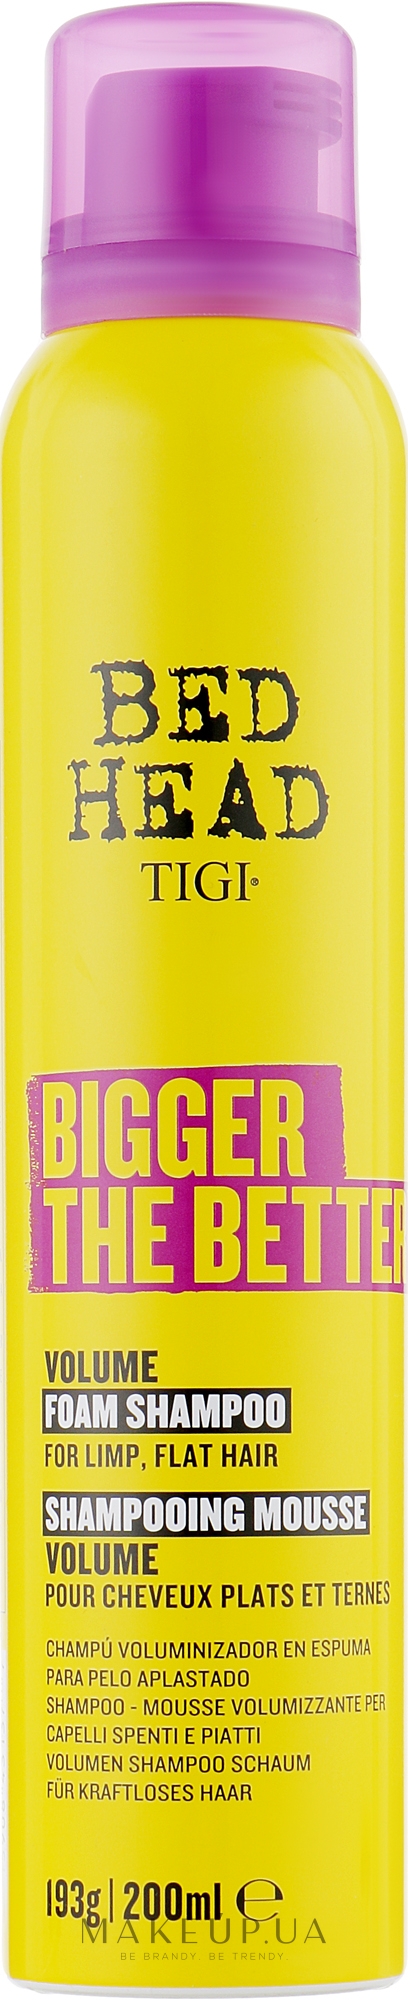 Шампунь-пенка для придания объема тонких волос - Tigi Bed Head Bigger The Better Volume Foam Shampoo — фото 200ml